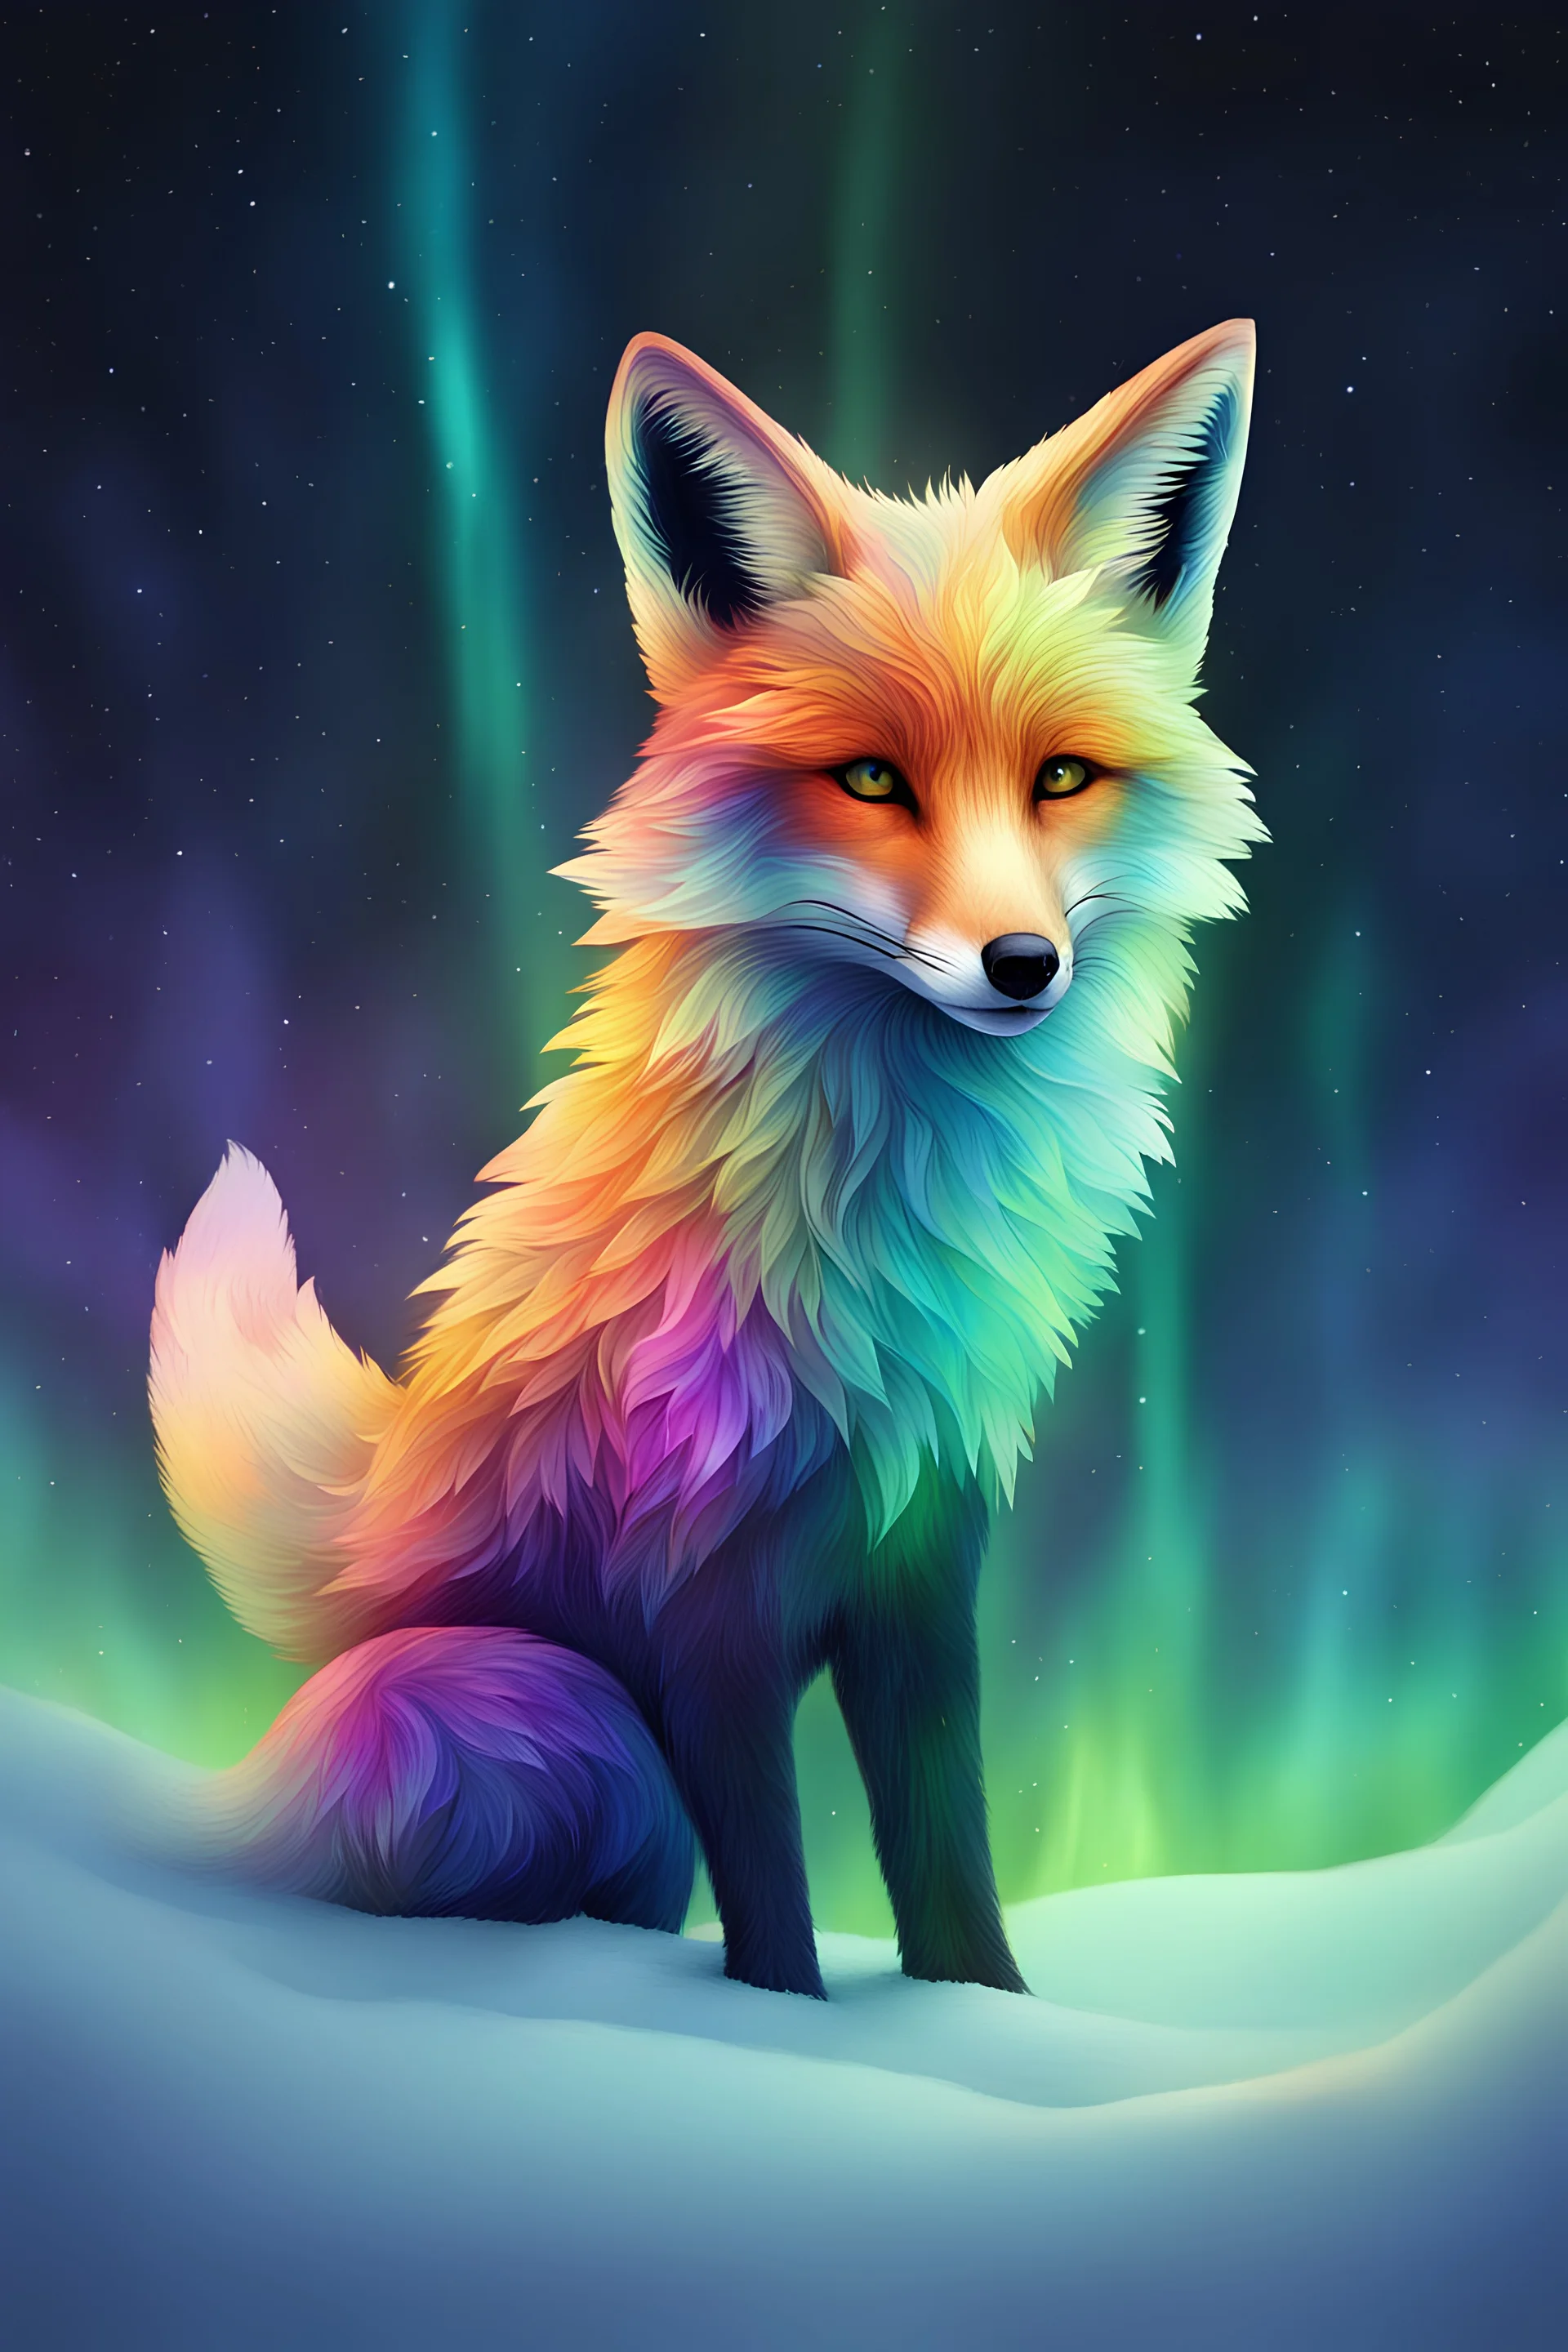 fox made of aurora borealis